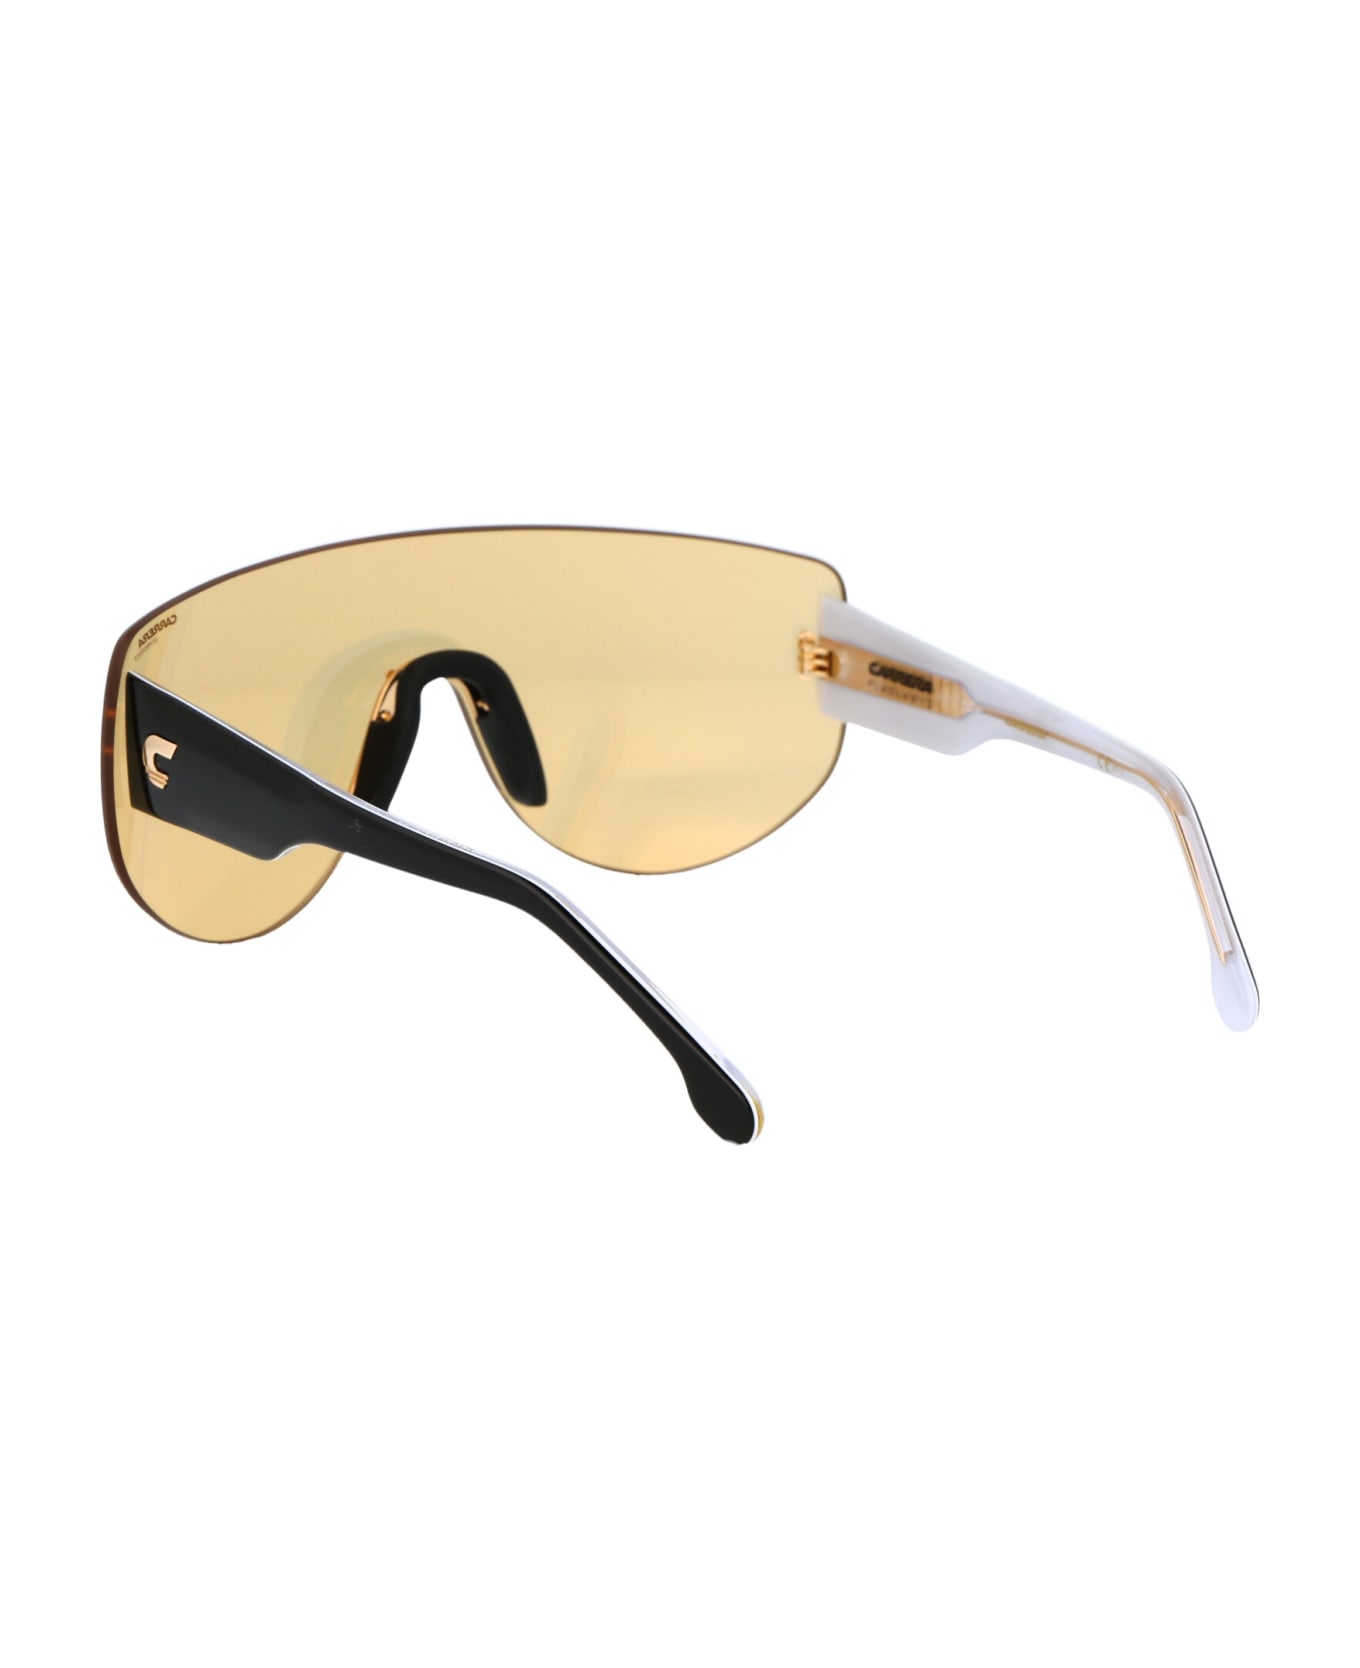 Carrera Flaglab 12 Sunglasses - 4CWET YELLOW BLACK サングラス